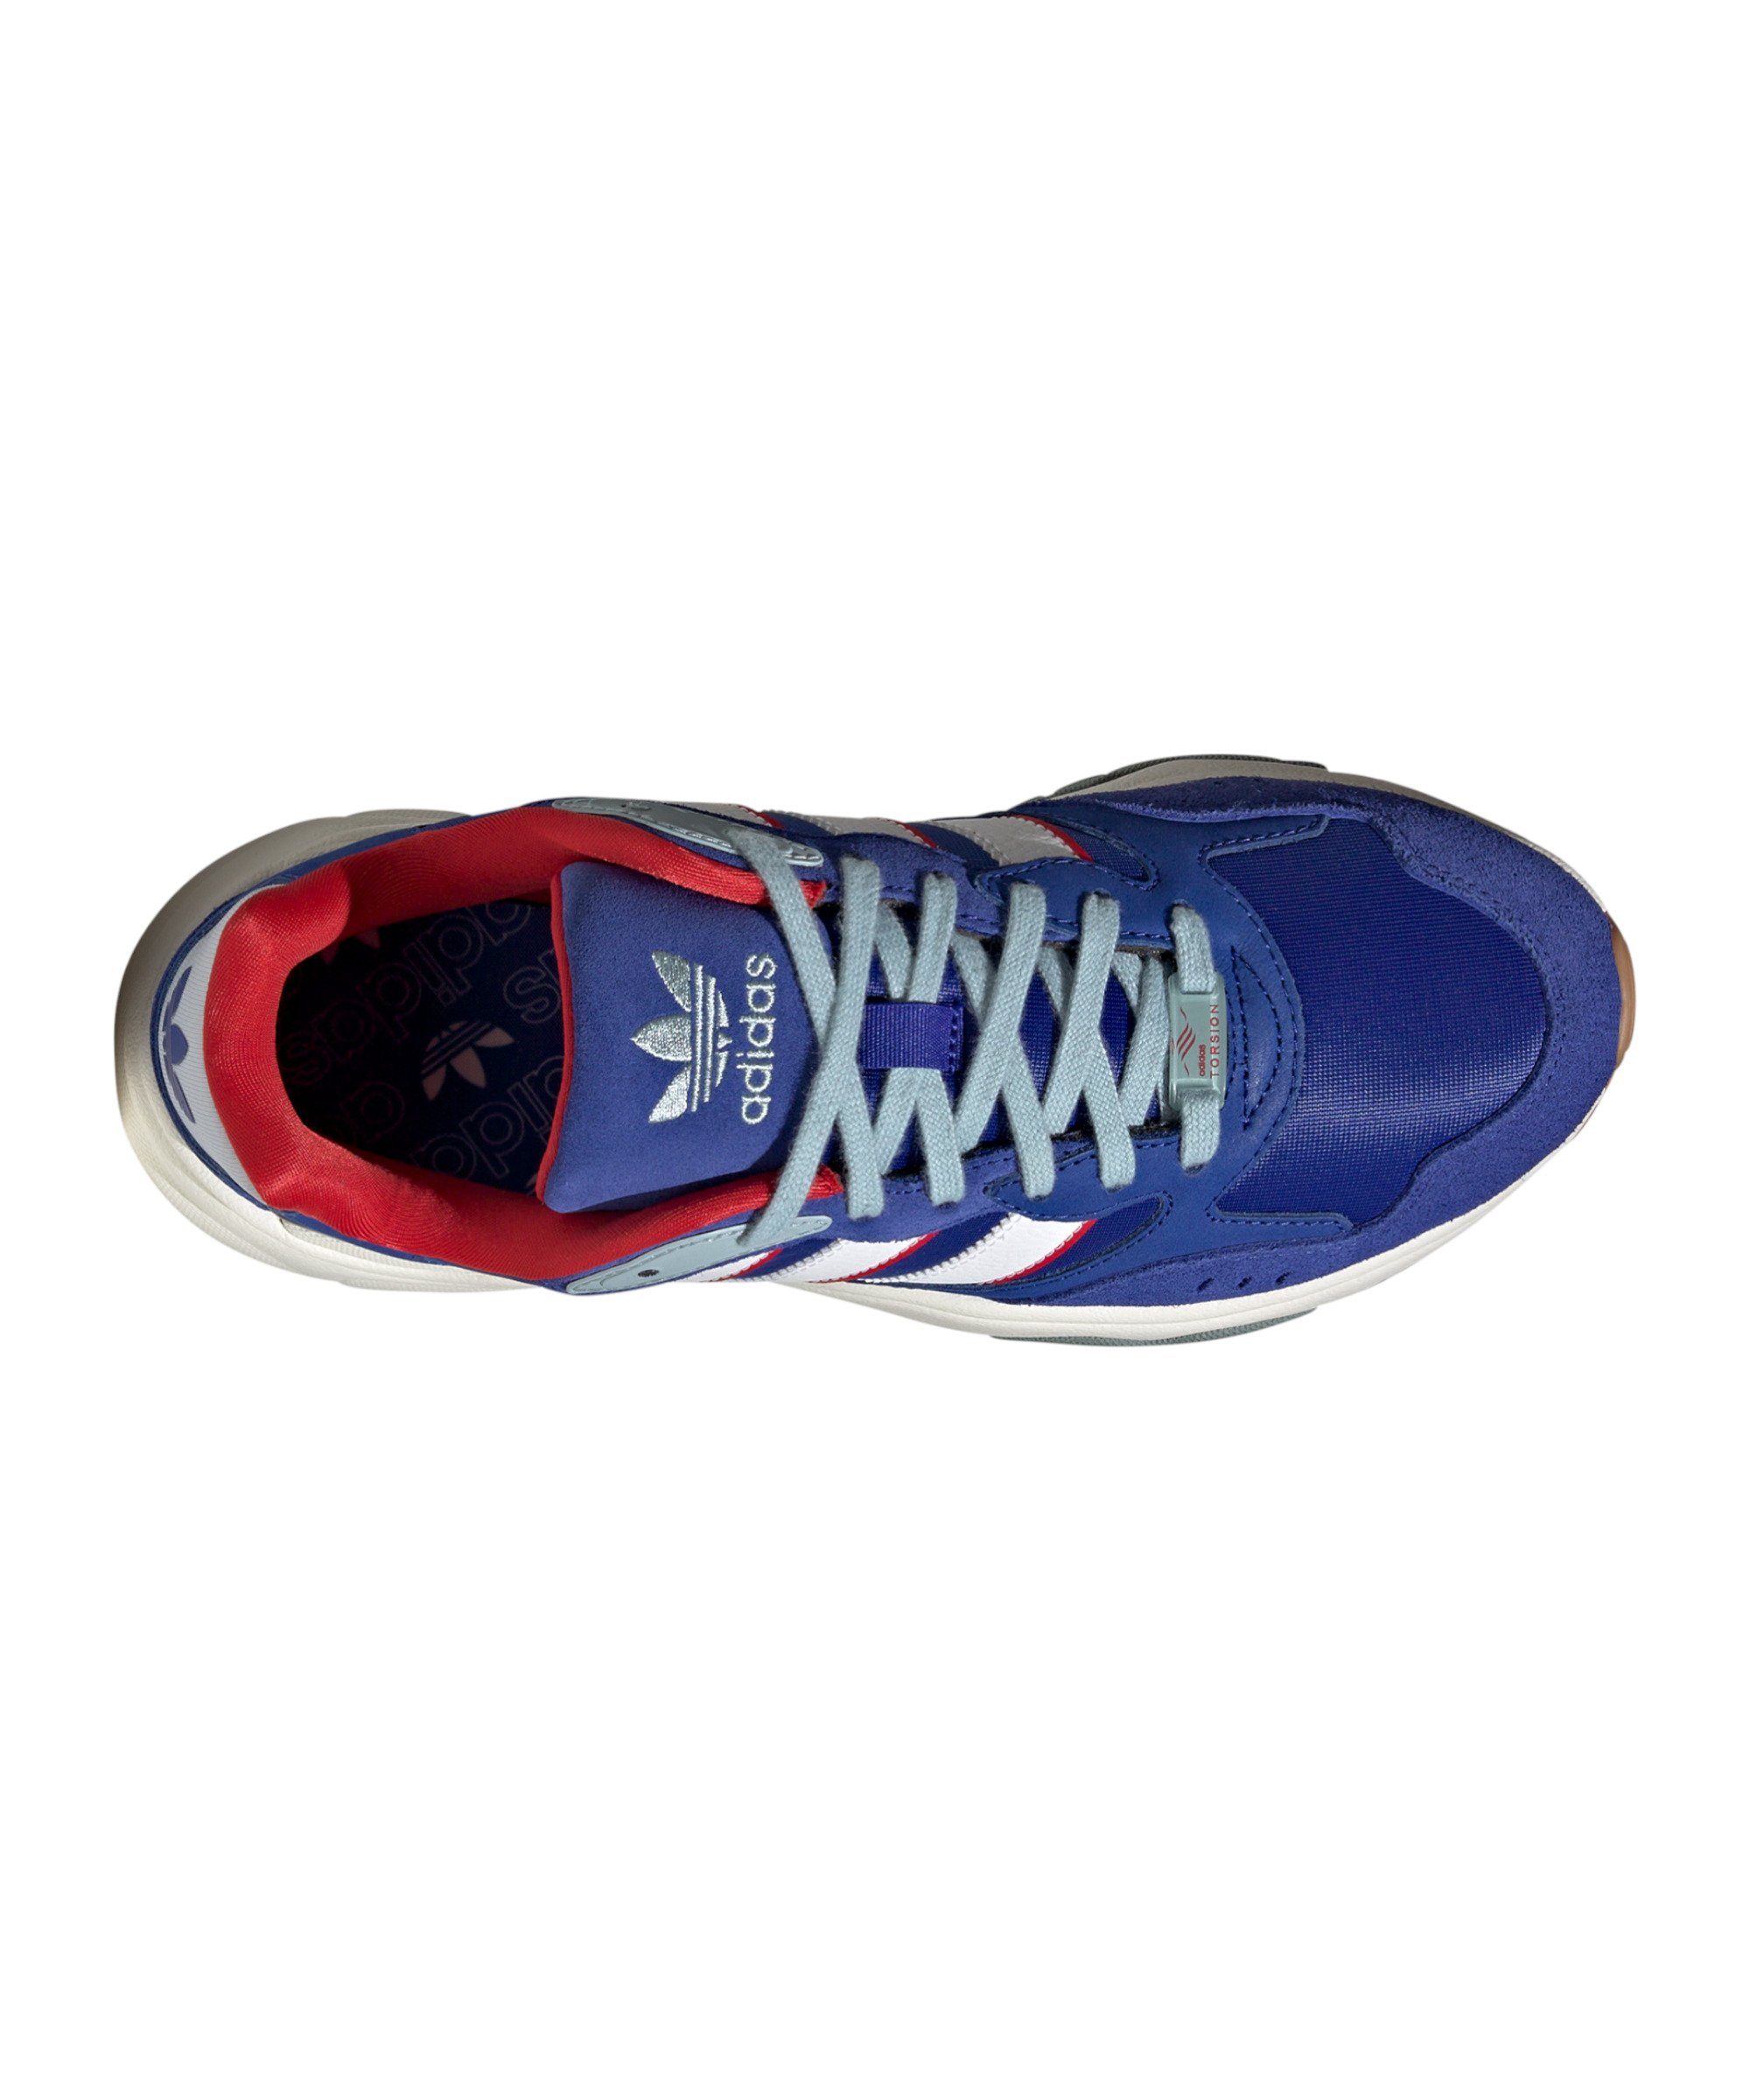 Originals Retropy F90 Sneaker adidas blauweissrot